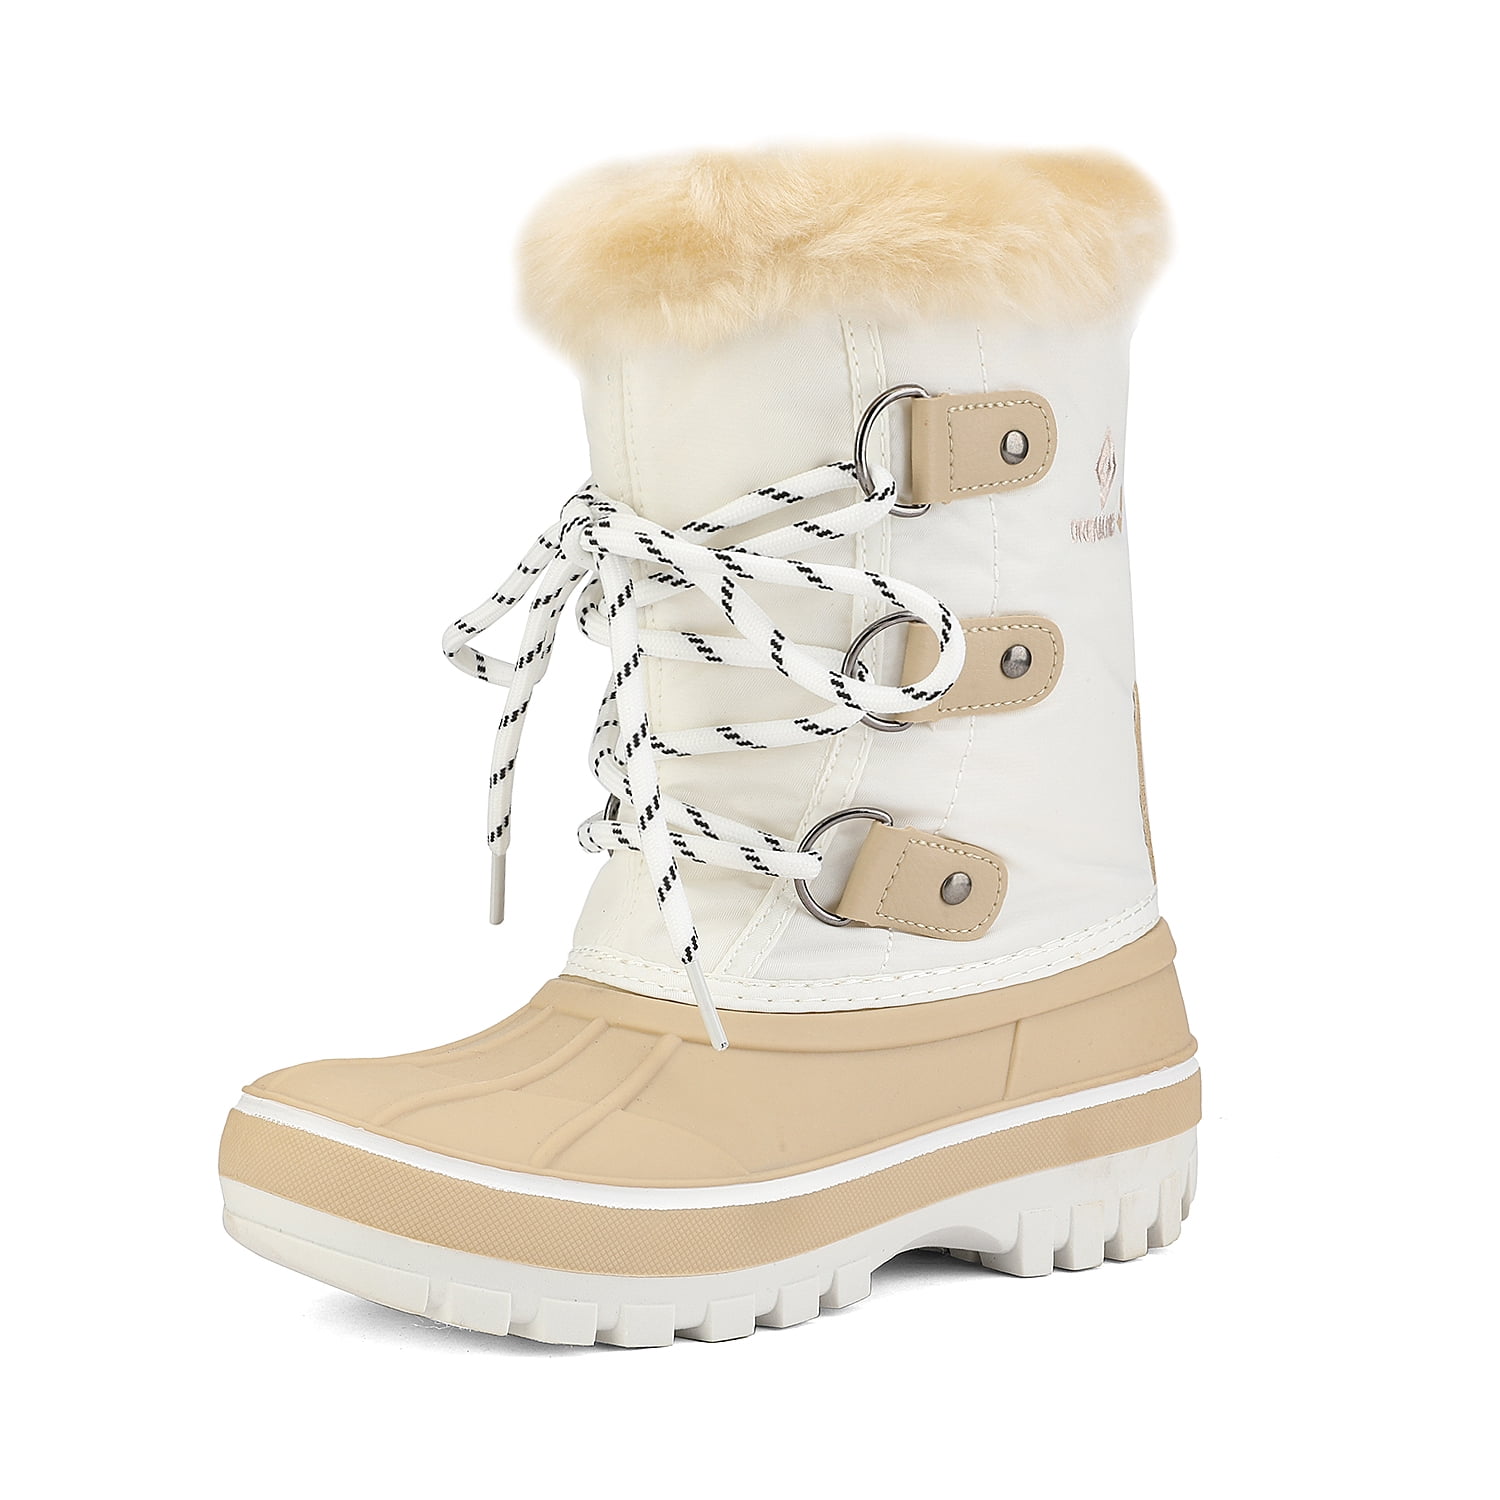 kids snow boots size 11